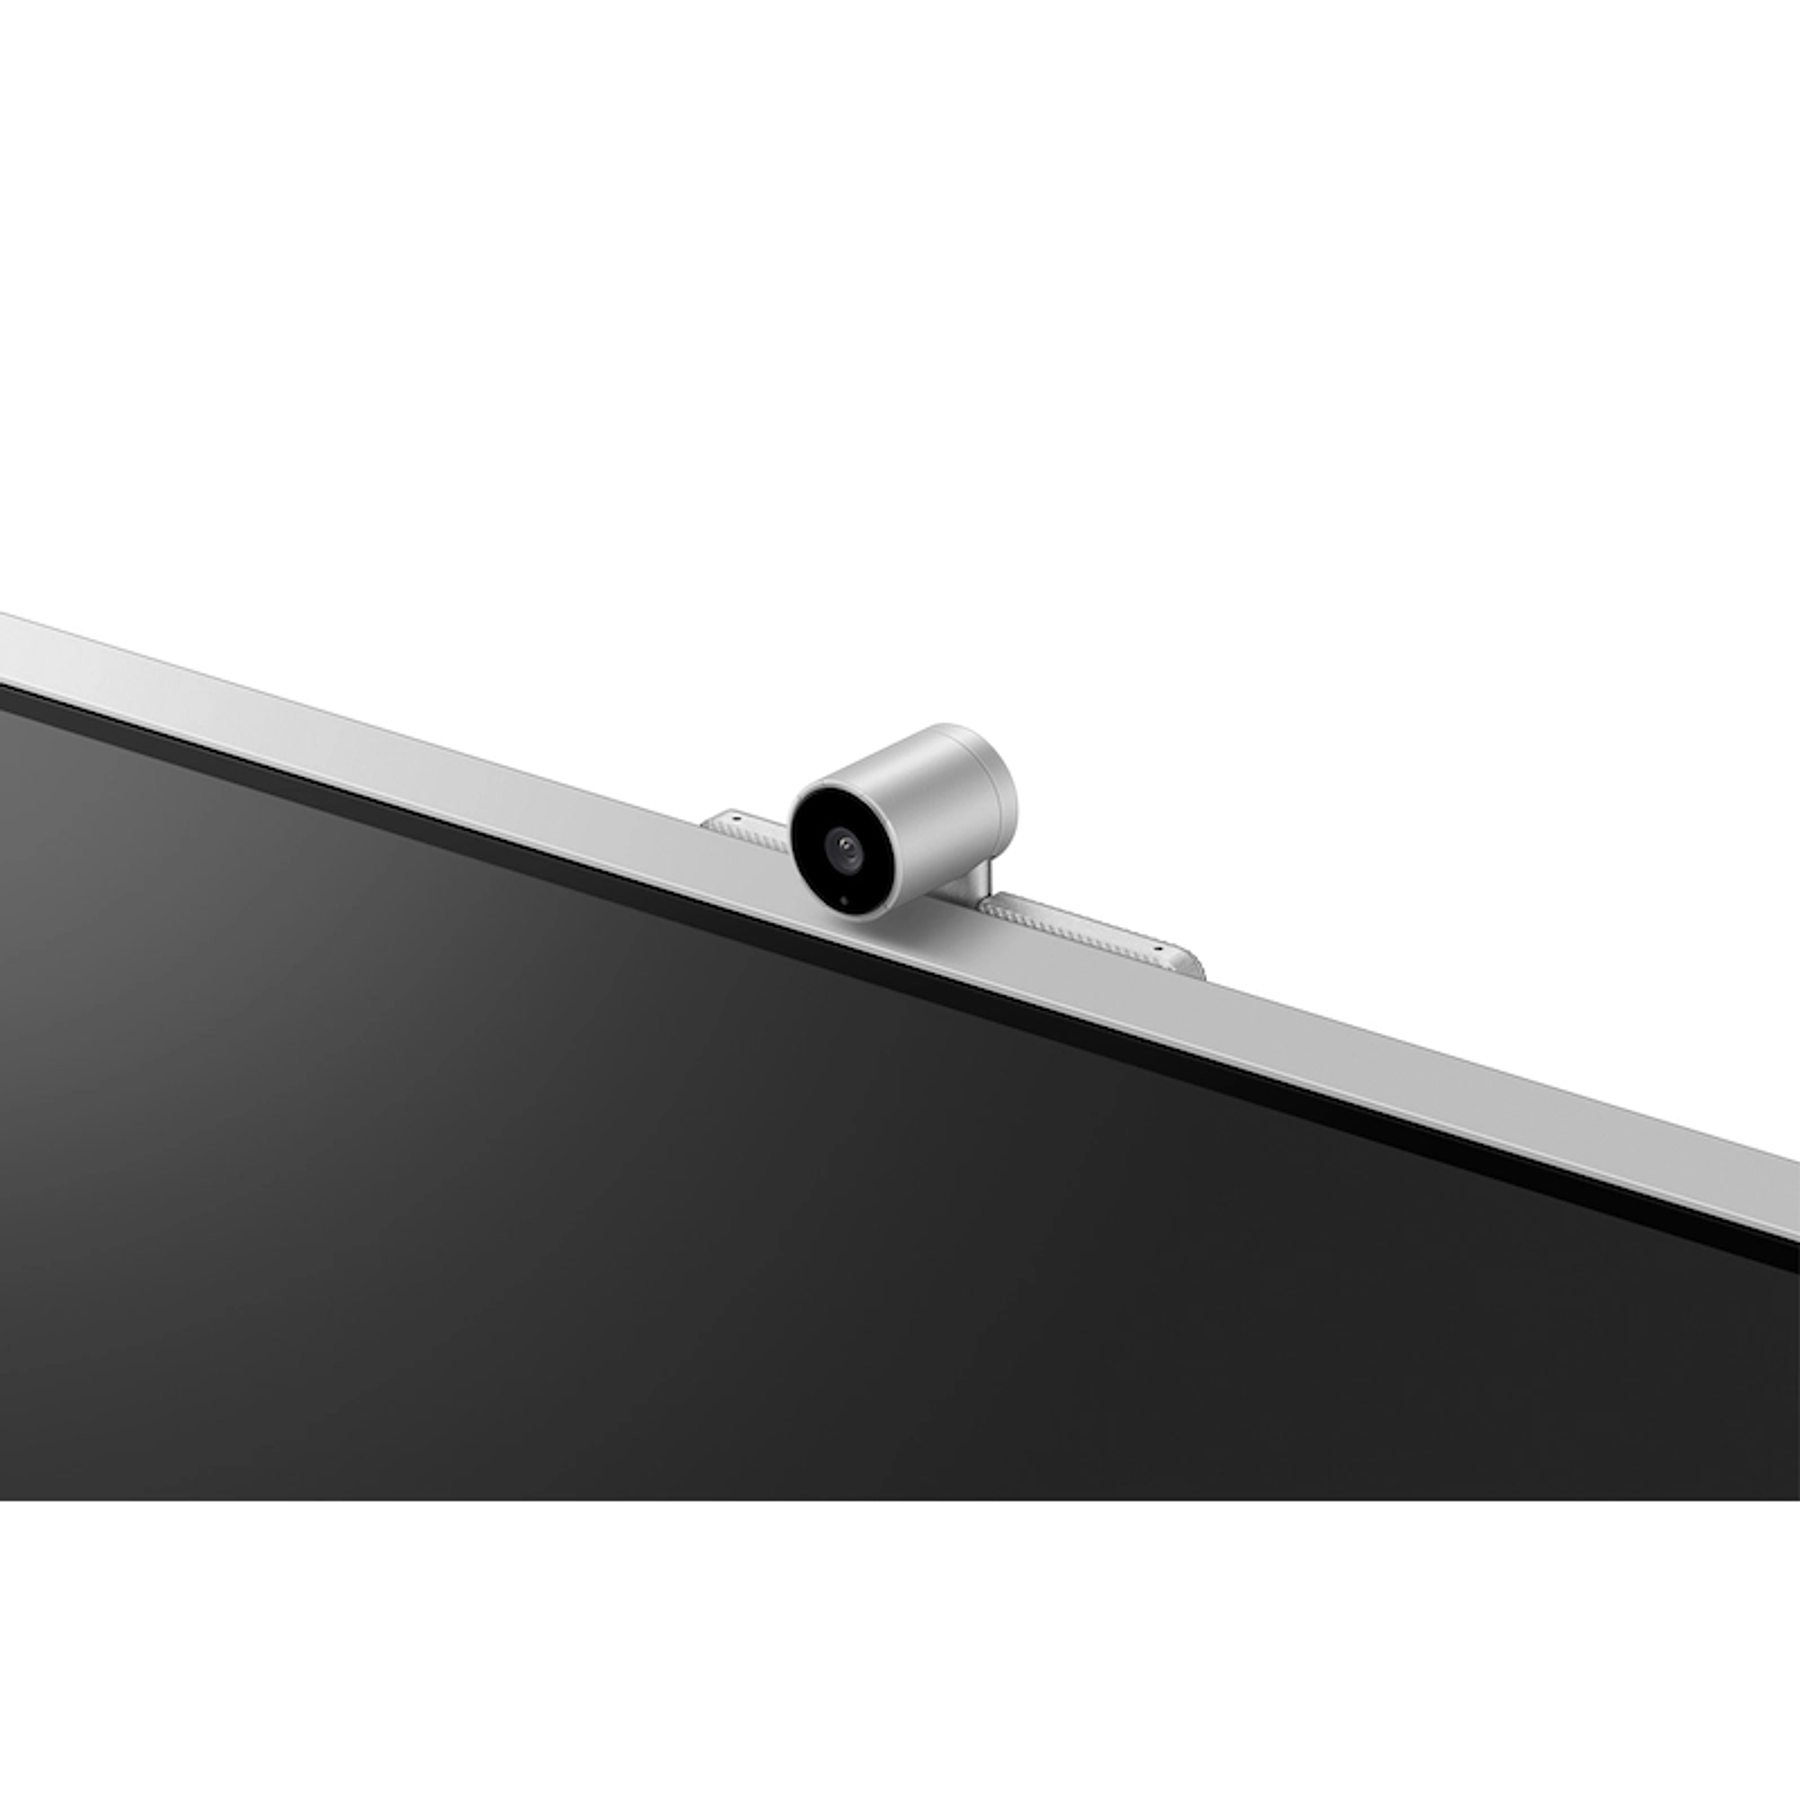 Samsung Monitor Inteligente Viewfinity S9 5K IPS de 27 Pulgadas